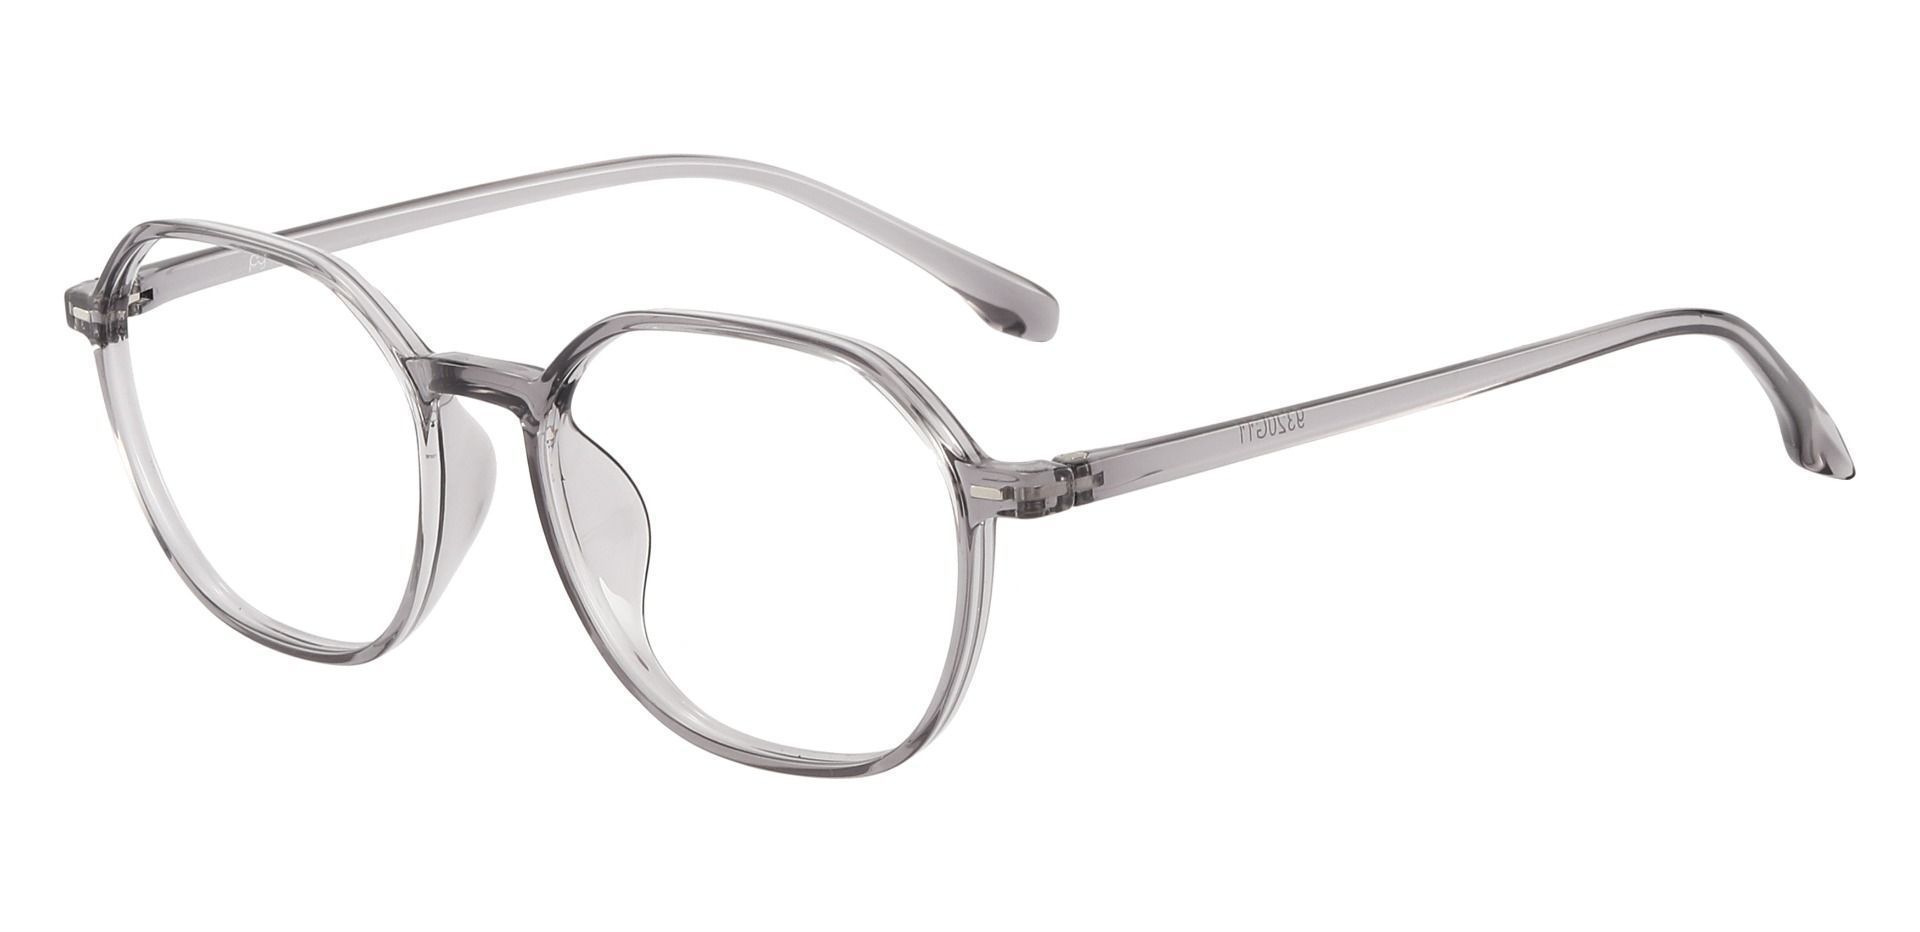 Detroit Geometric Lined Bifocal Glasses - Gray